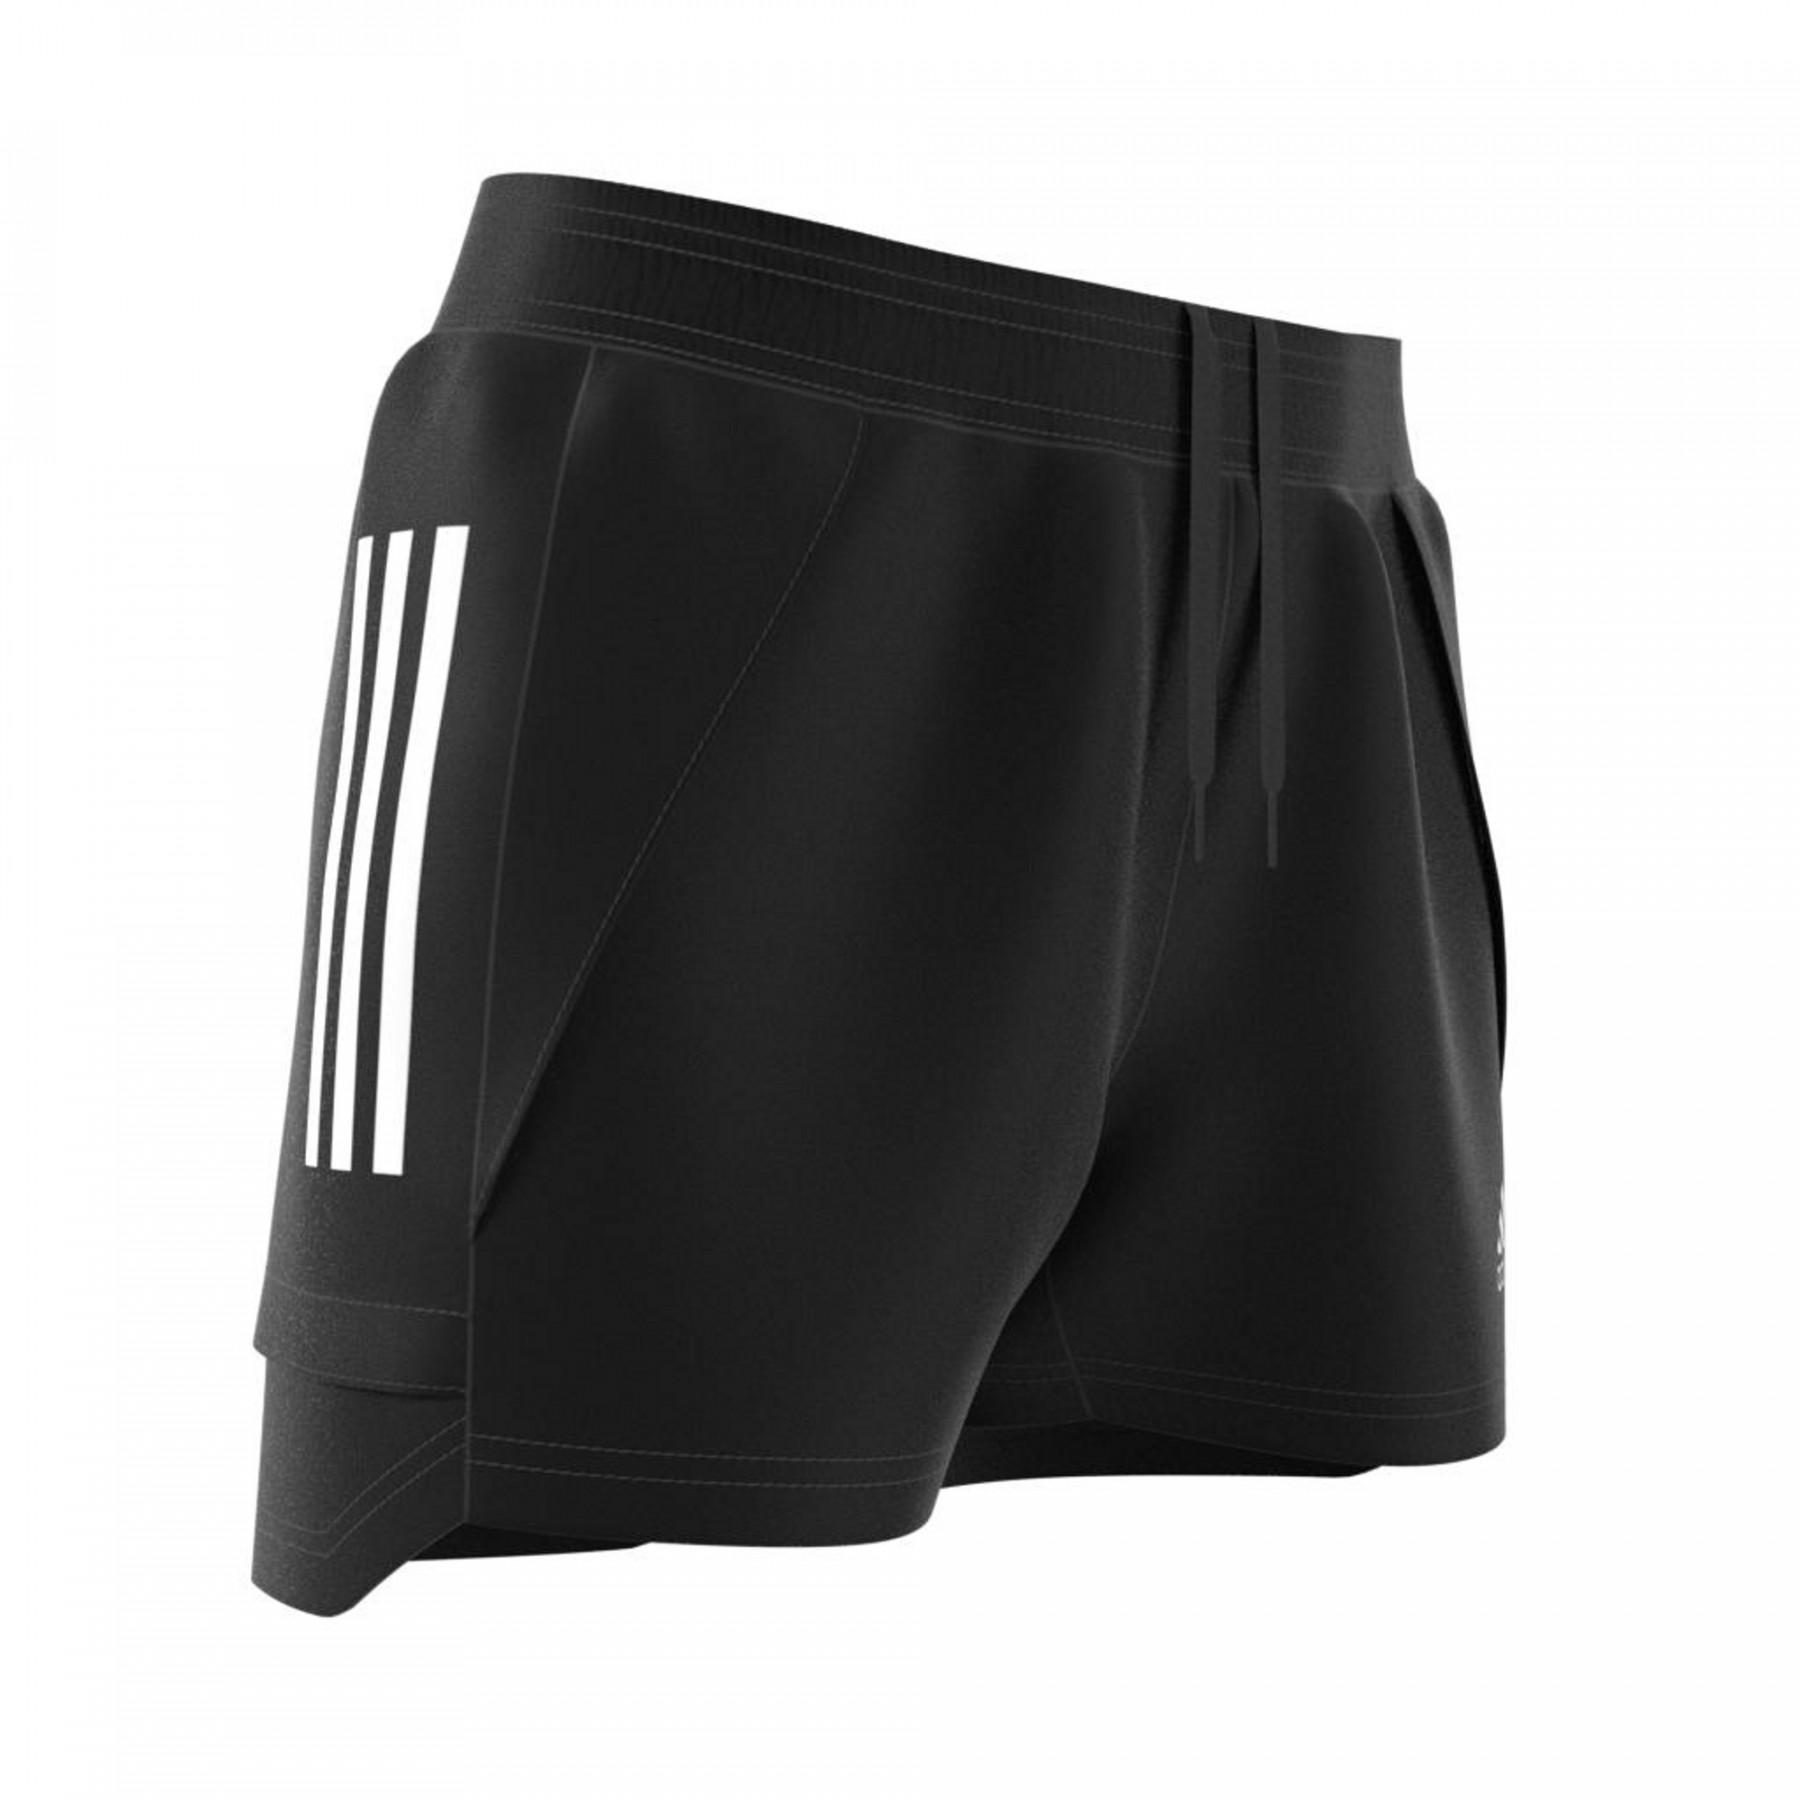 Women's training shorts adidas Condivo 20